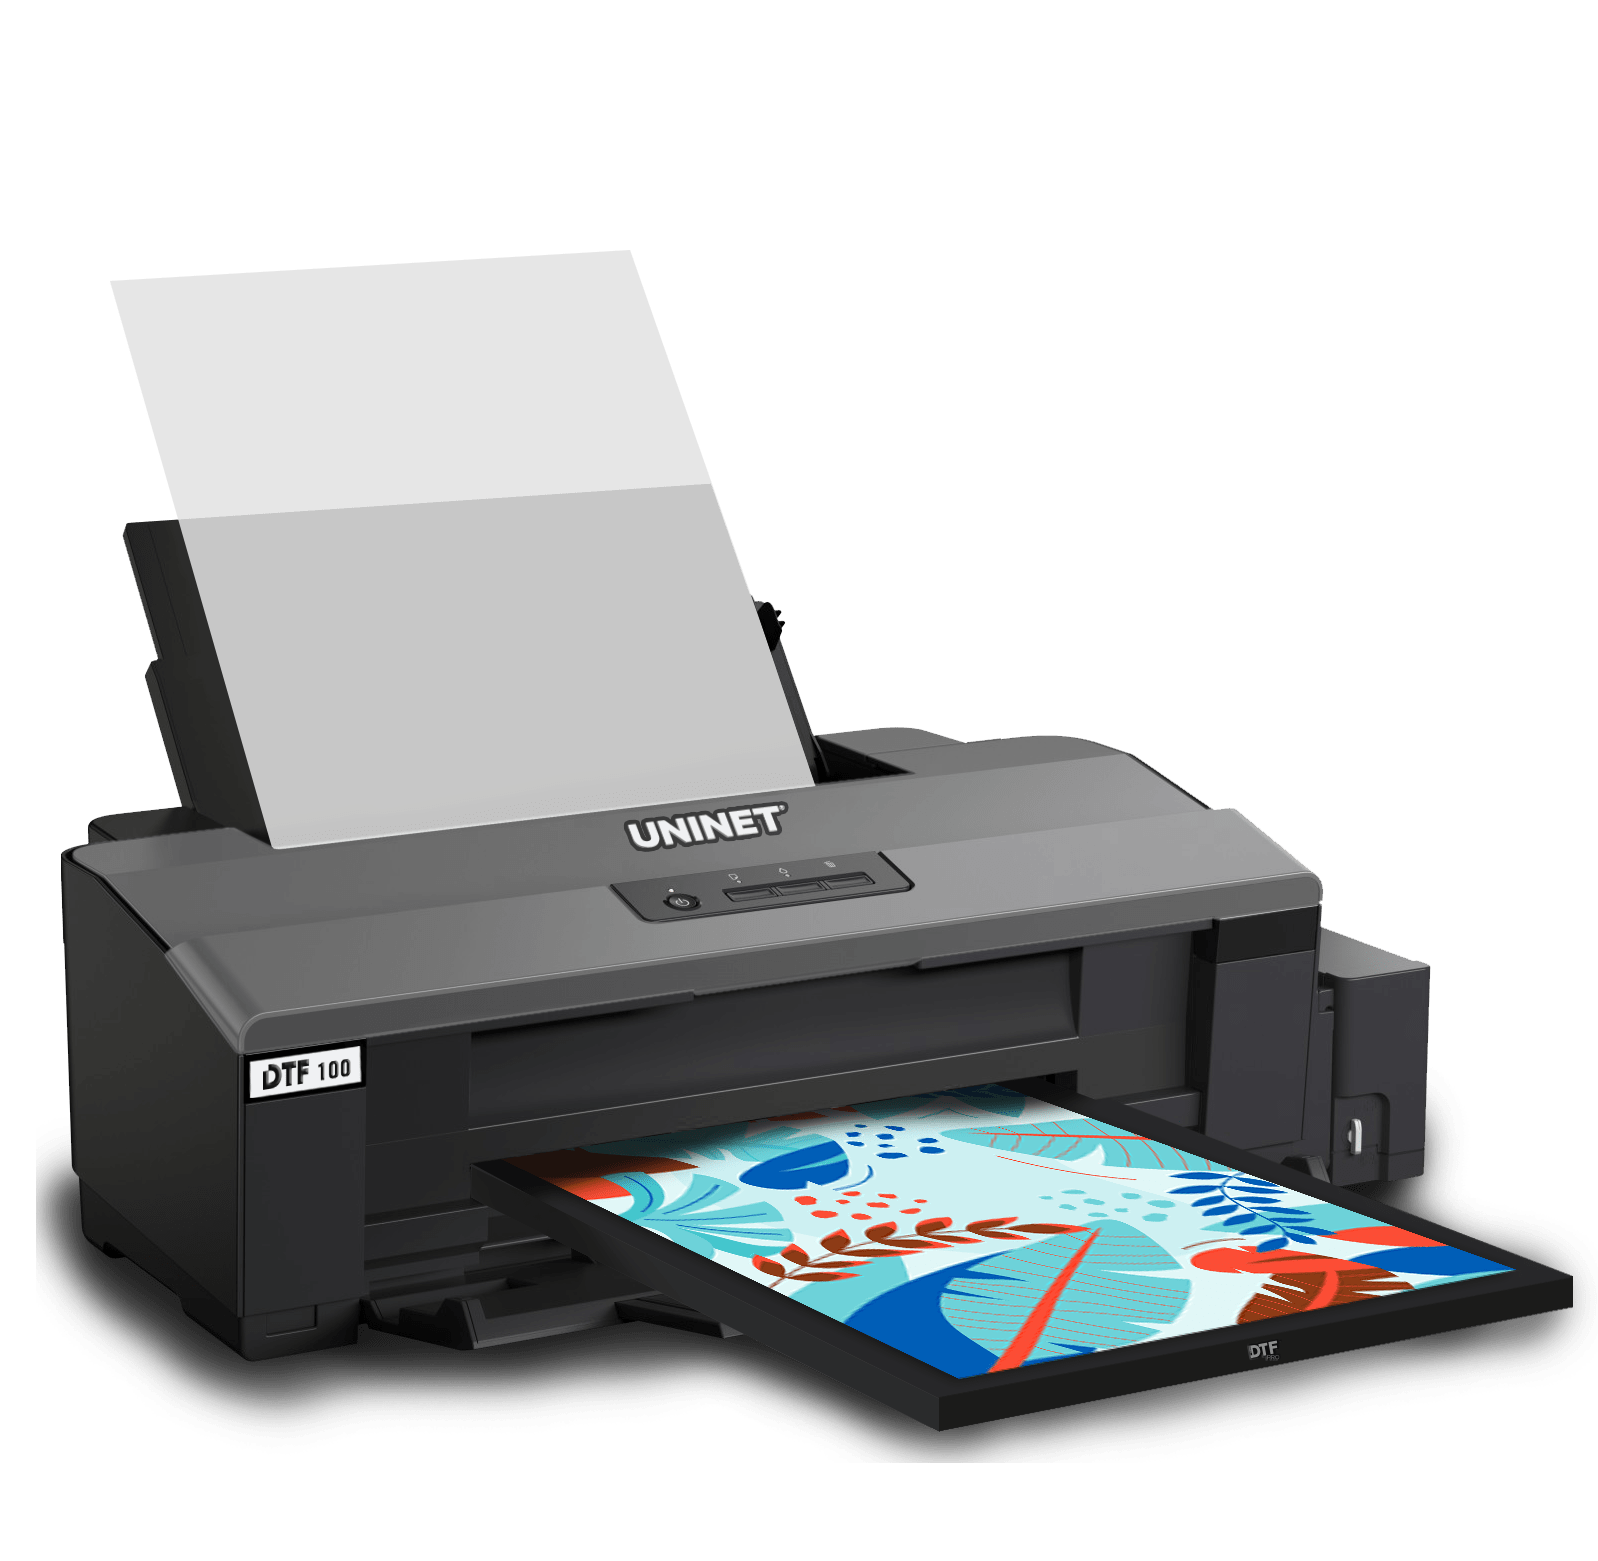 Uninet 100 DTF Printer (Includes Training, Starter Bundle, 1 Year Warranty)